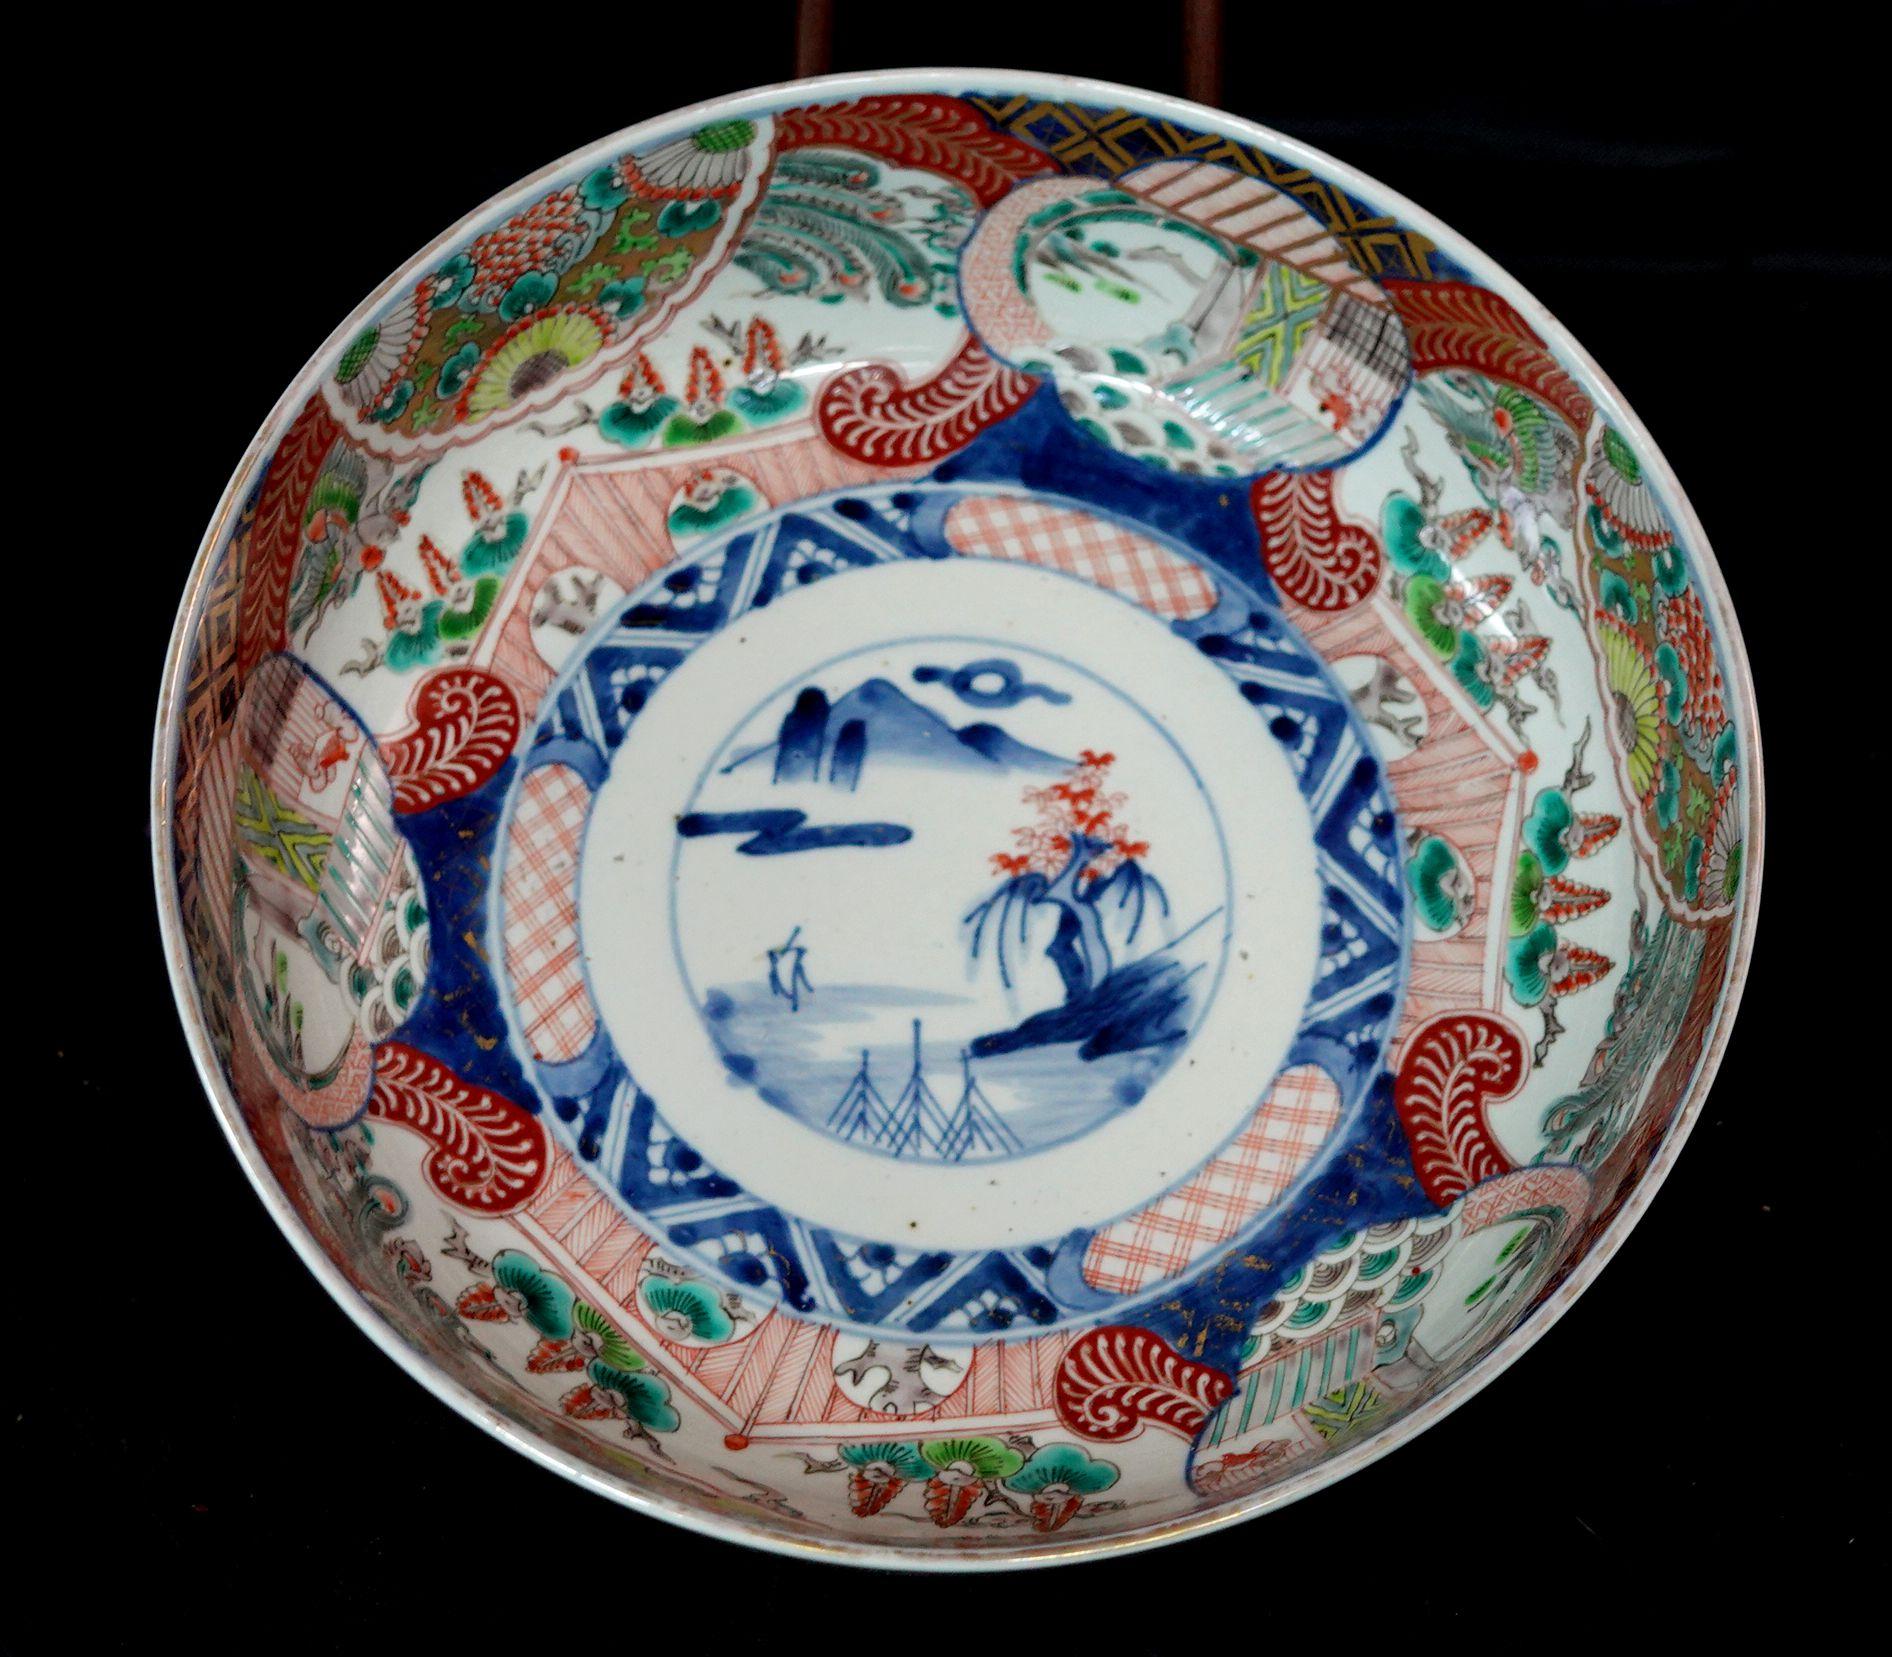 Japanese antique a large 19th century Imari bowl with landscape, flowers, tree and garden sense design.